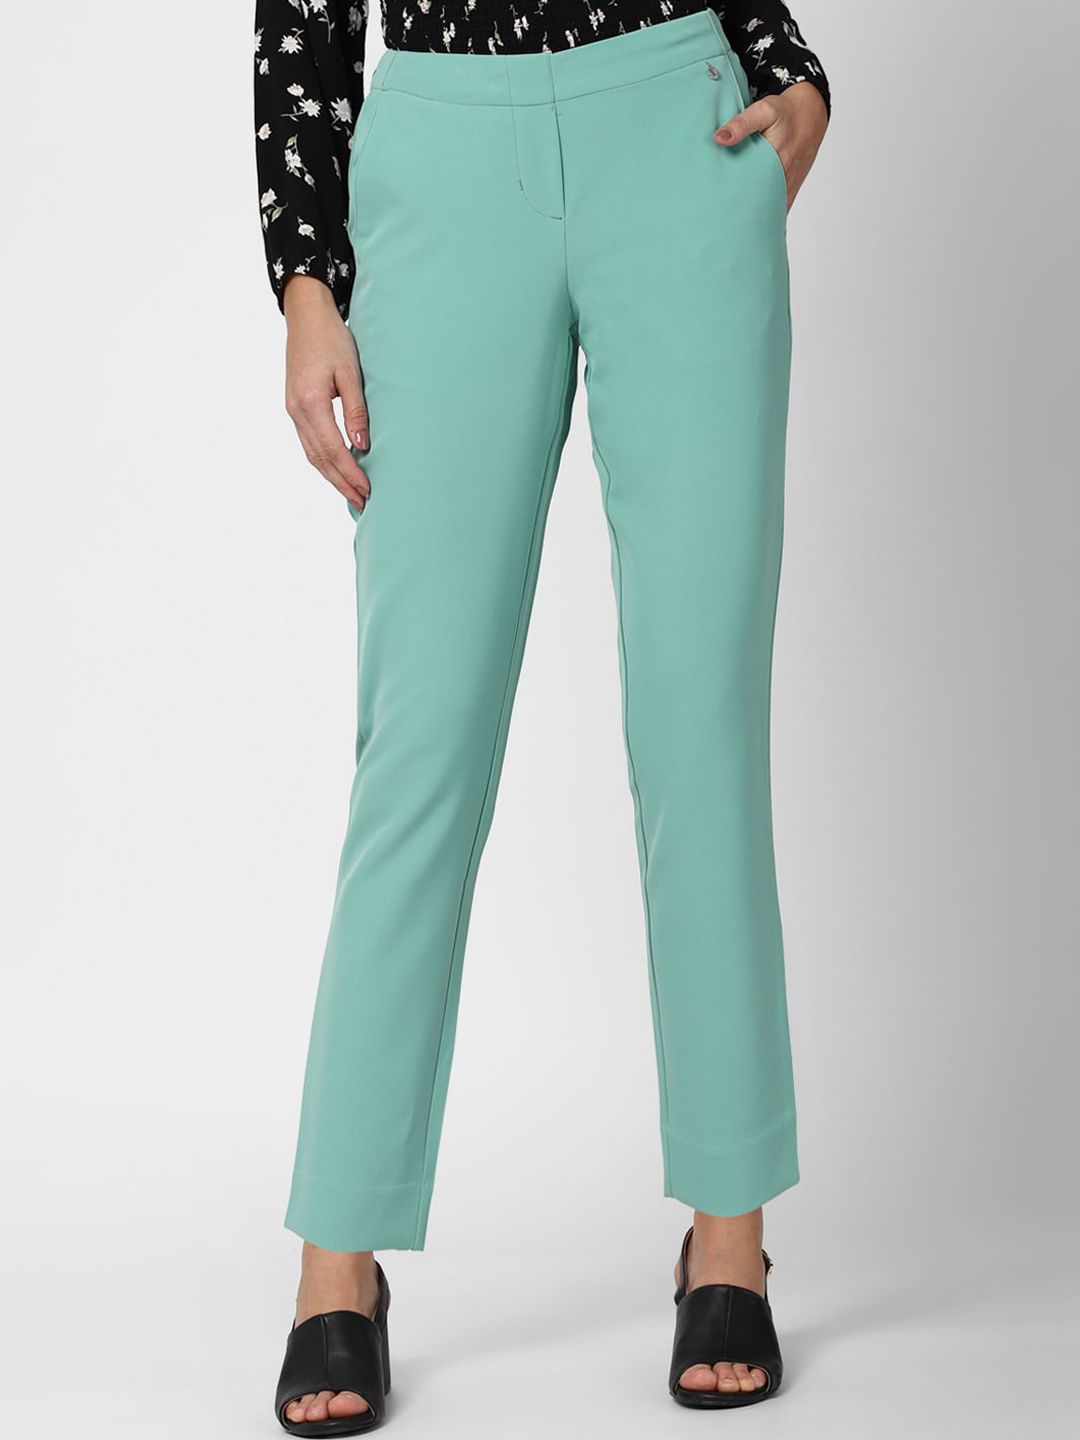 Van Heusen Woman Sea Green Solid Regular Fit Trousers Price in India